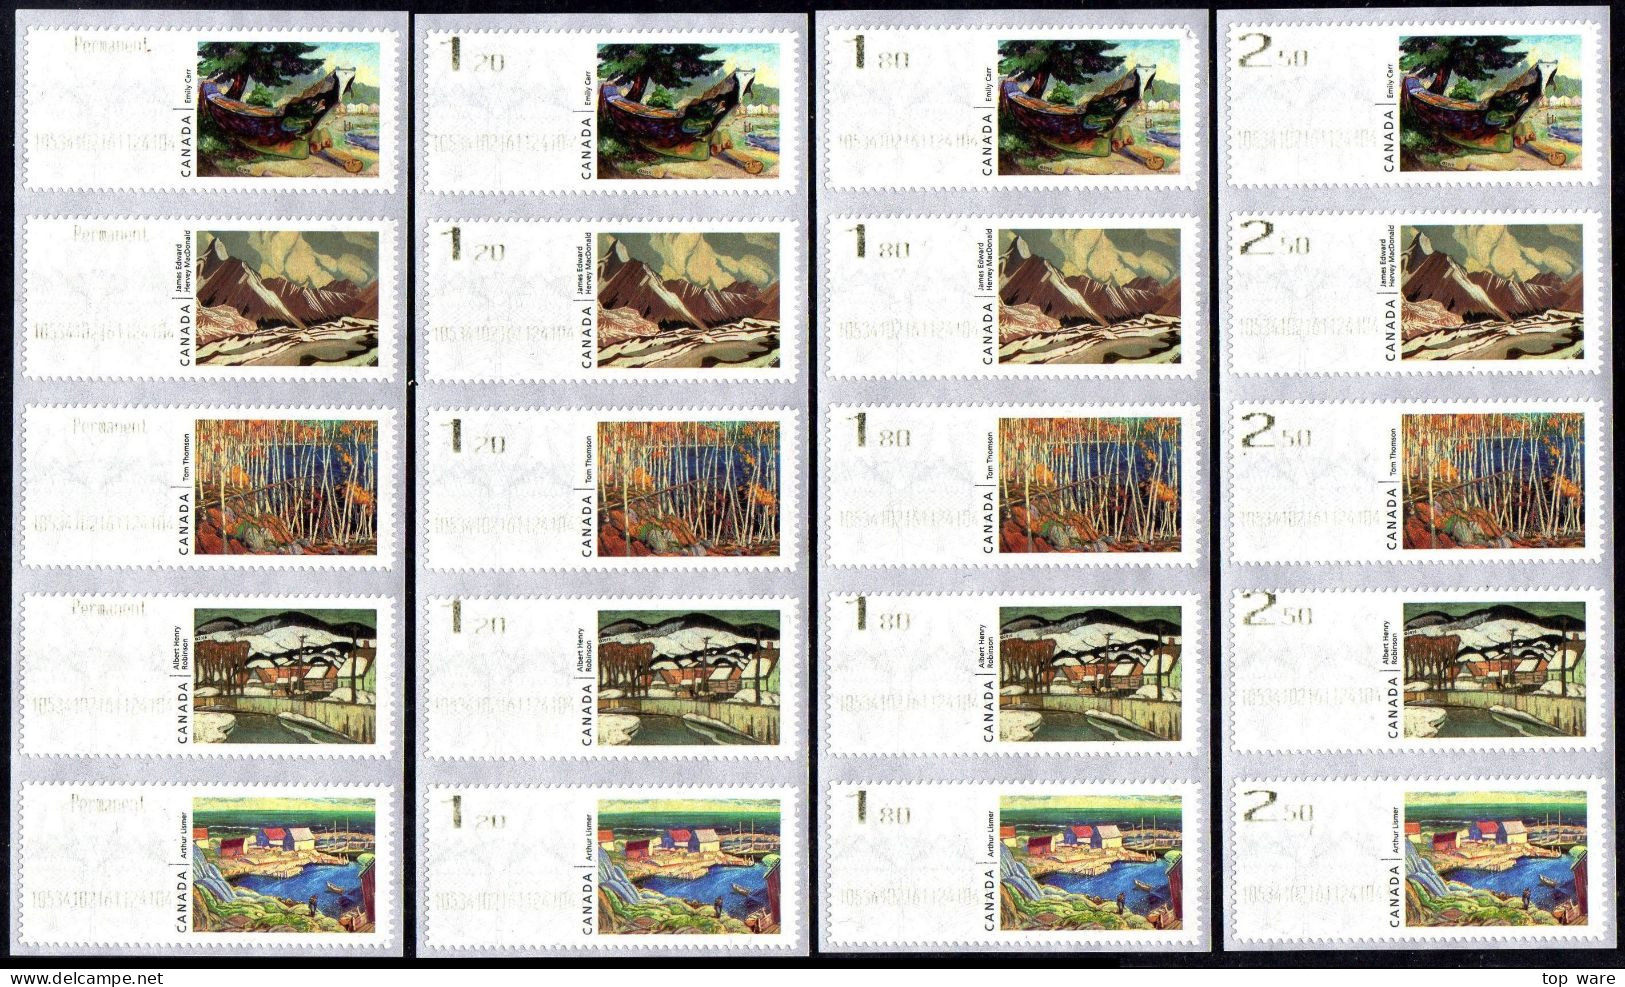 Canada Kanada ATM Kiosk Stamps 2-6 / Famous Painters / Full Set With 18 Digit Control Numbers MNH / Automatenmarken - Vignettes D'affranchissement (ATM) - Stic'n'Tic